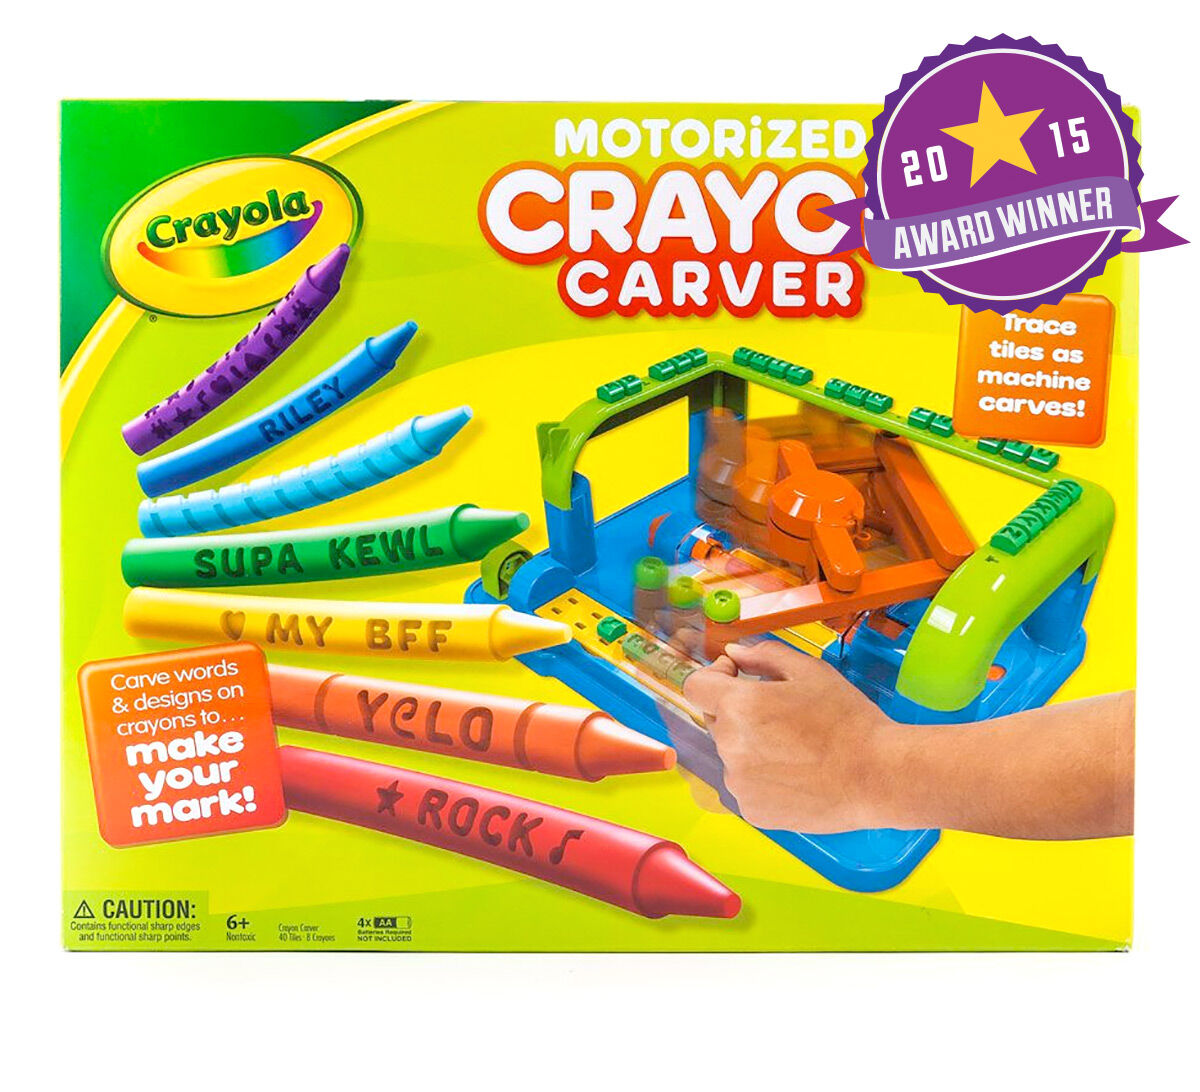 Personalizza Crayola Crayon motorizzato Carver-NUOVO 